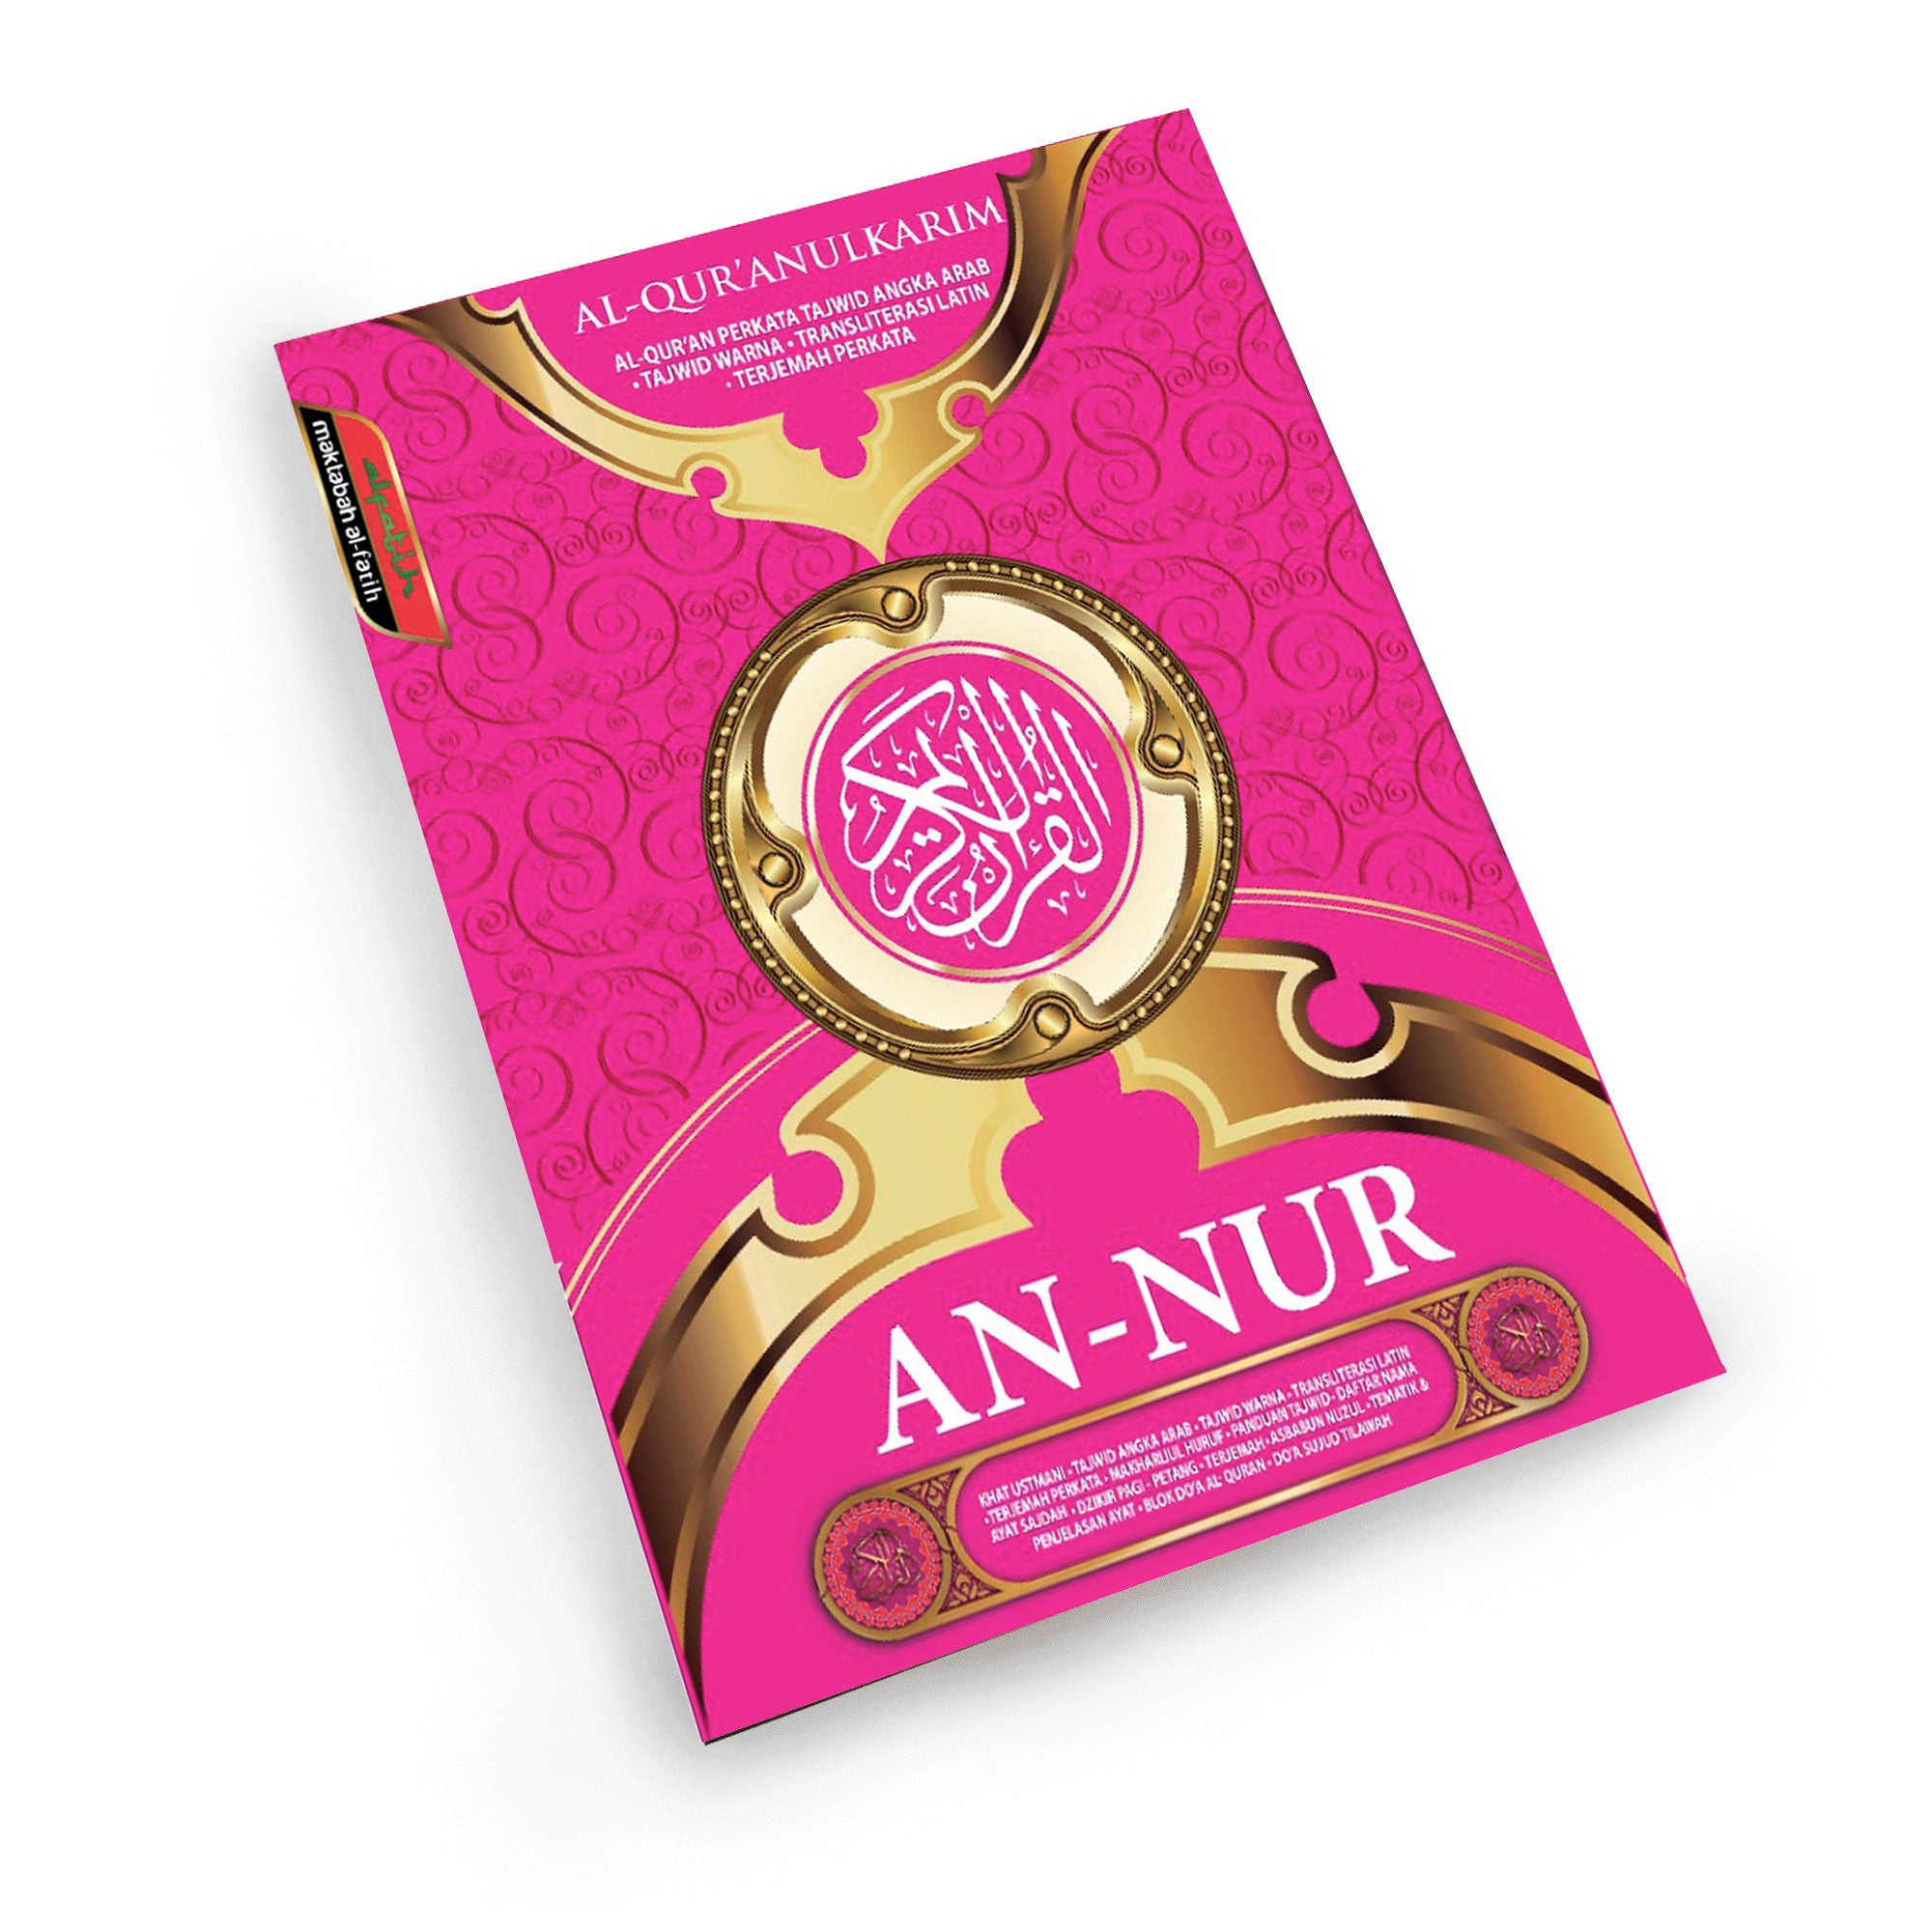 Al-Quran An-Nur（带罗马字母文本）- A4 尺寸粉色